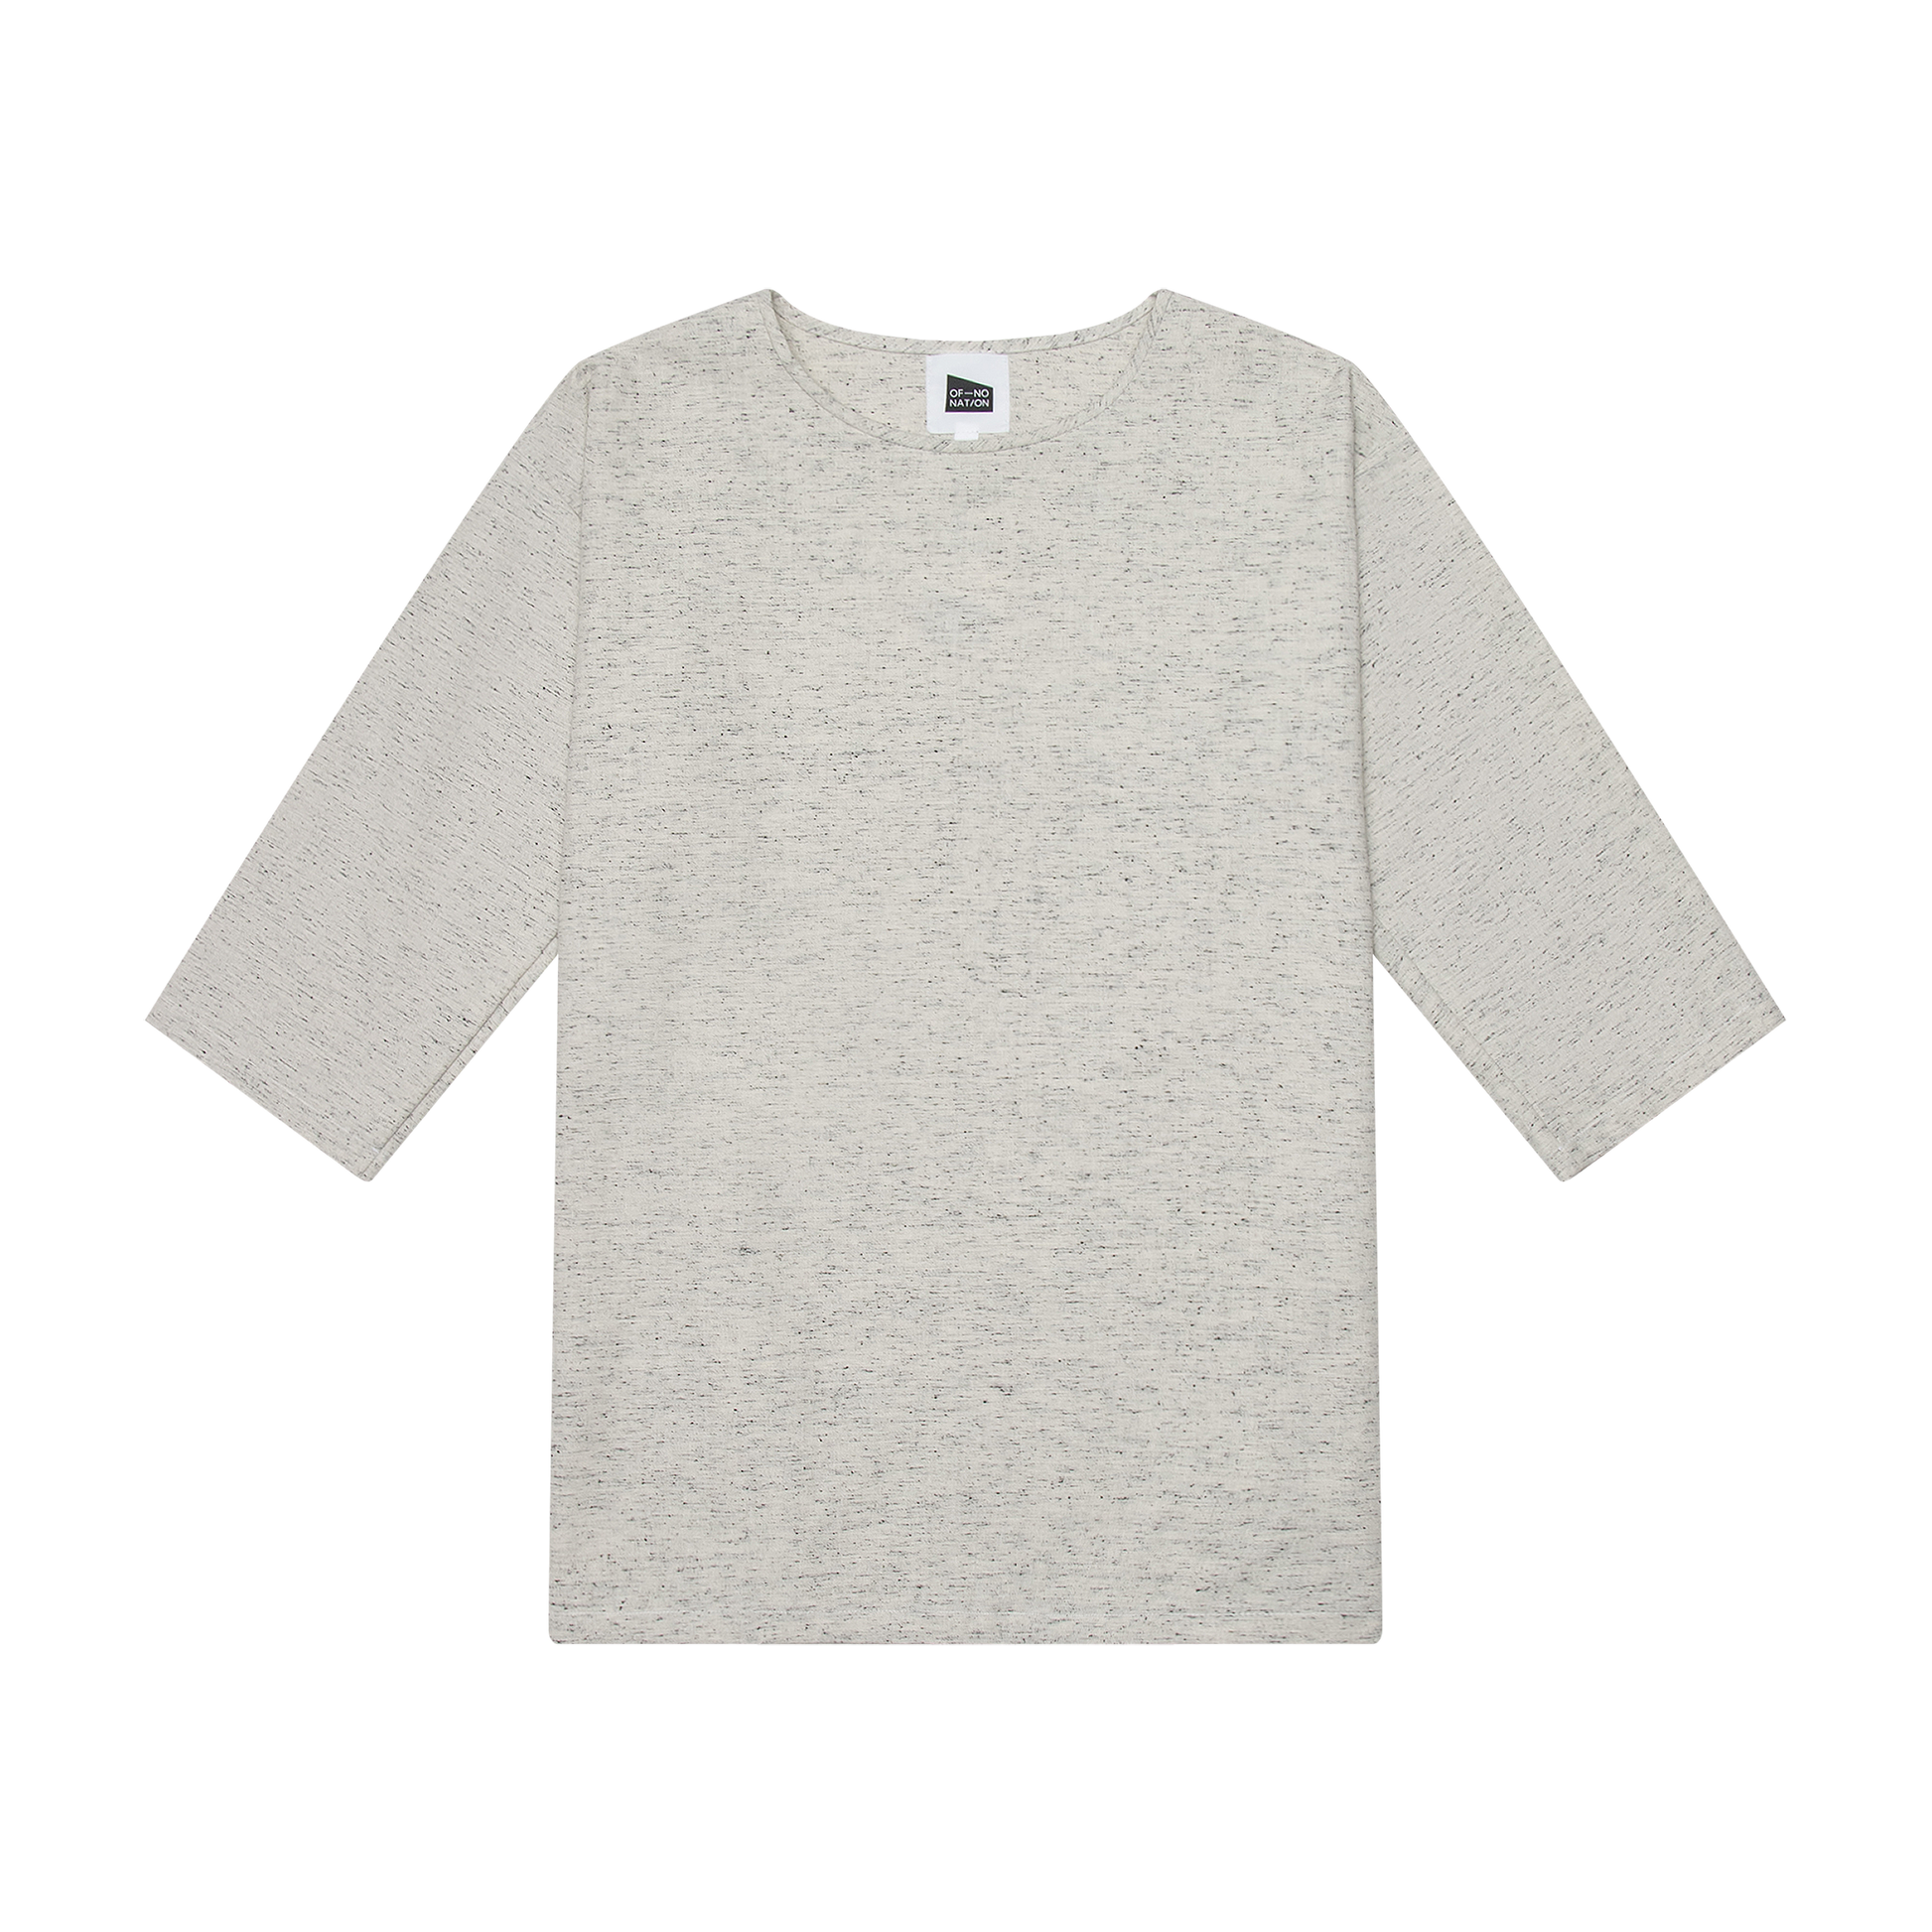 Yuki Three Quarter Shirt of—no nation